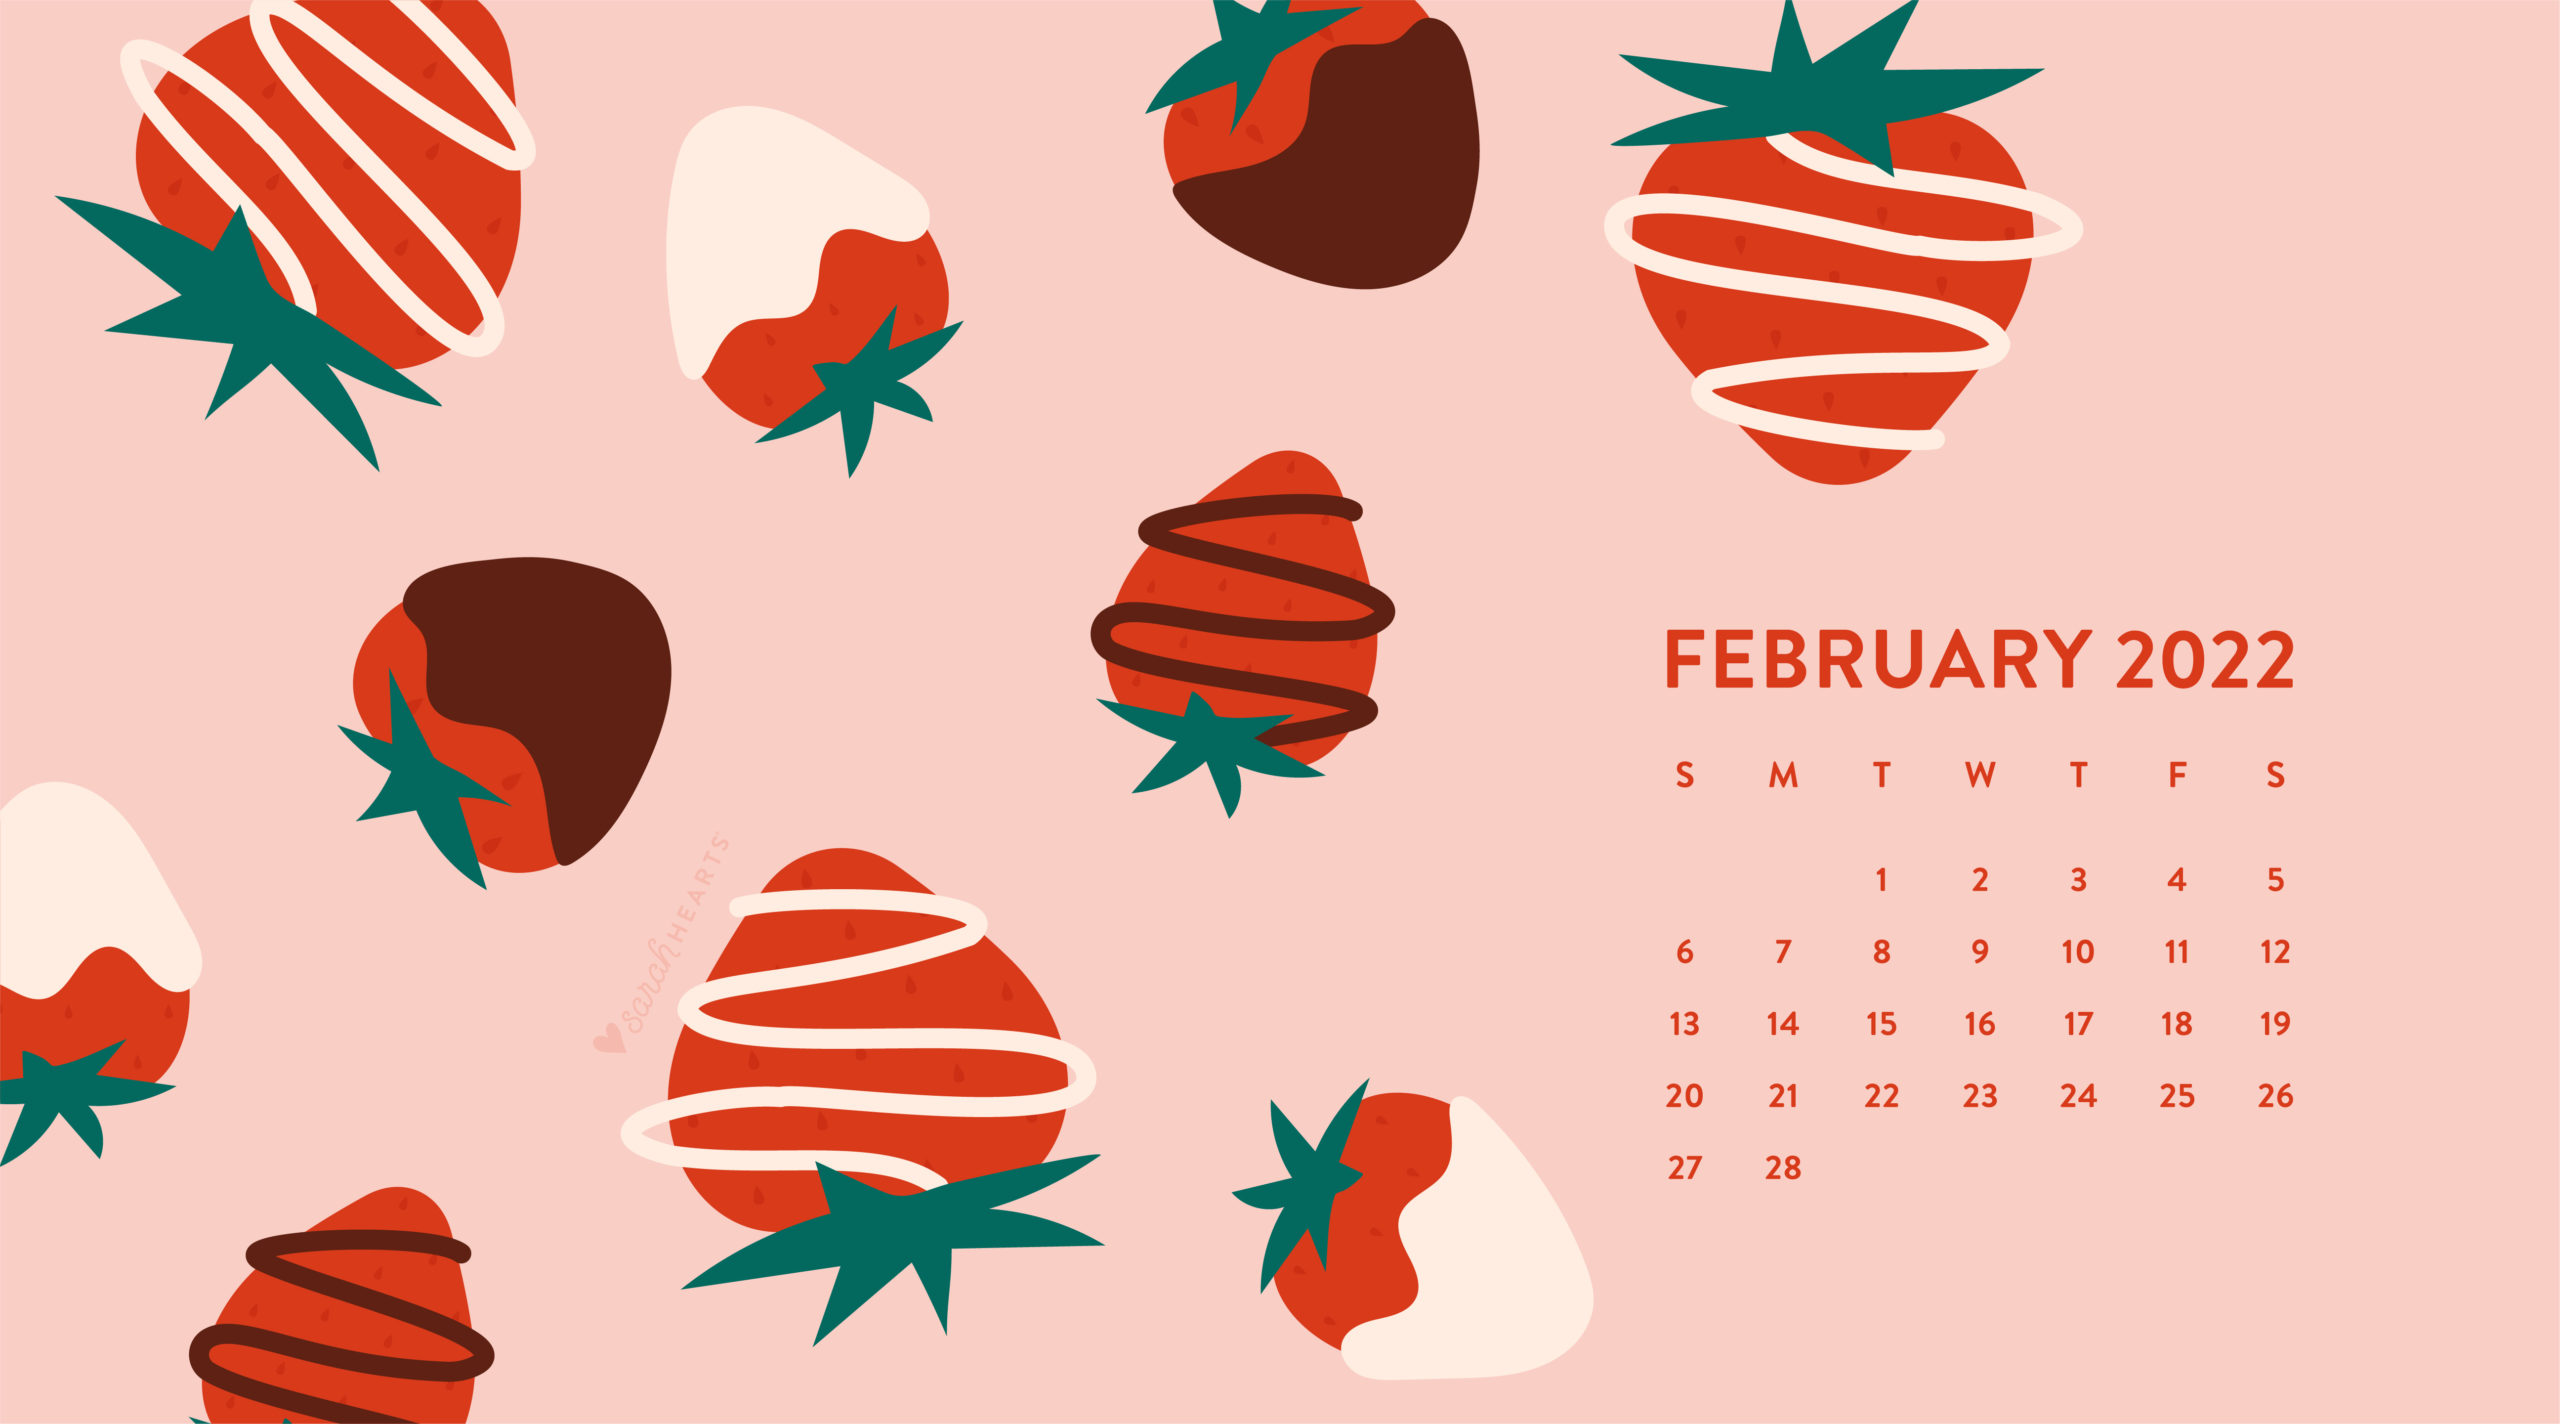 February 2022 Calendar Wallpaper February 2022 Chocolate Dipped Strawberry Calendar Wallpaper - Sarah Hearts